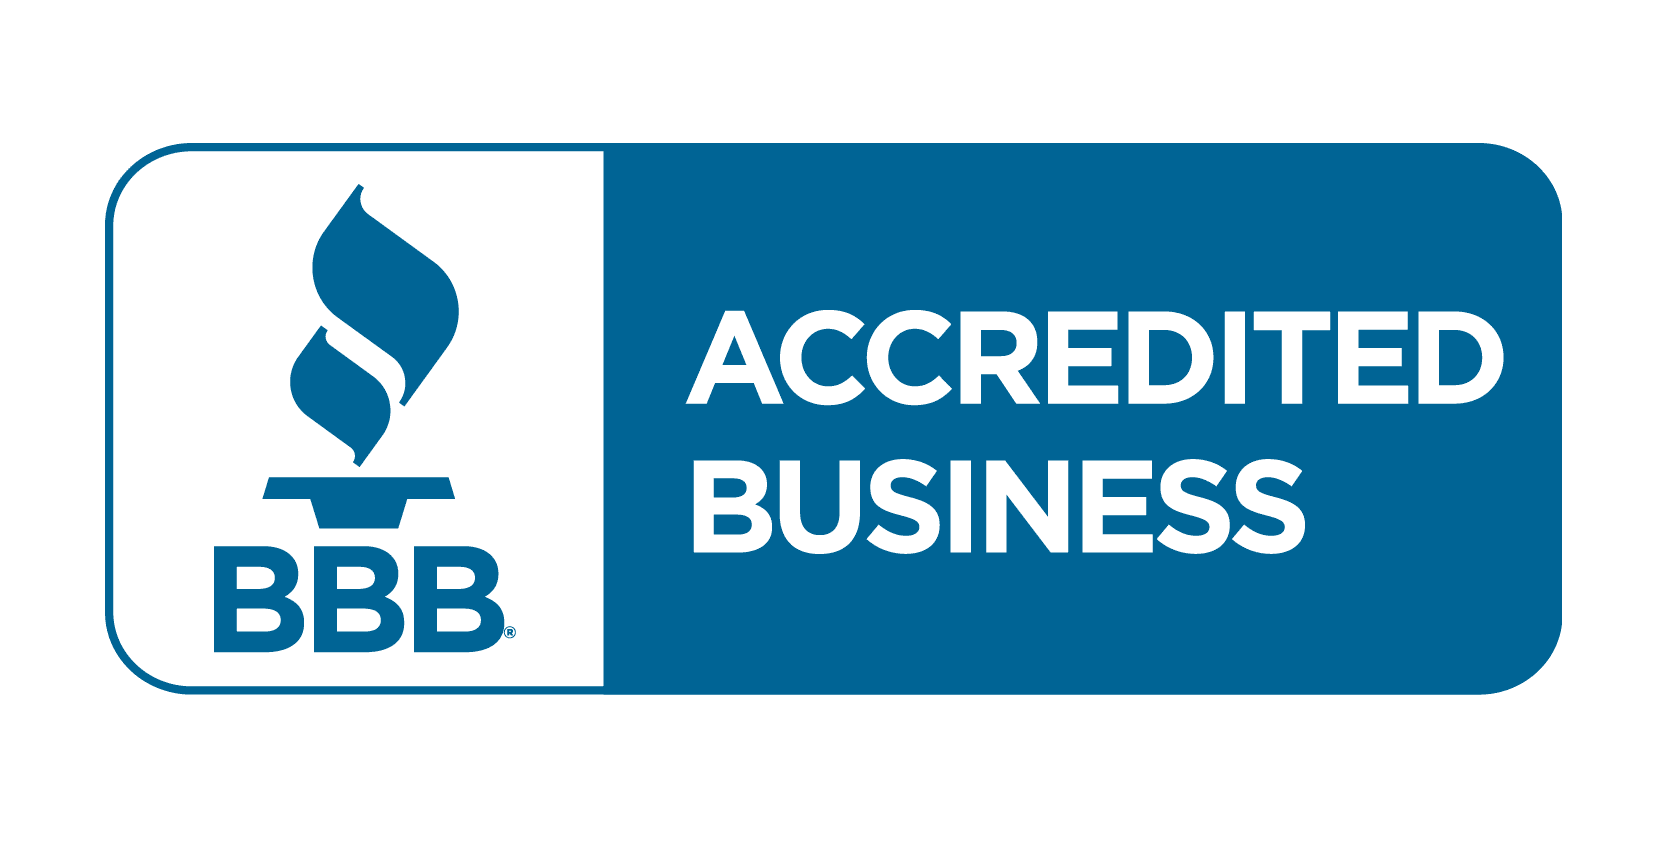 BBB accredidation logo